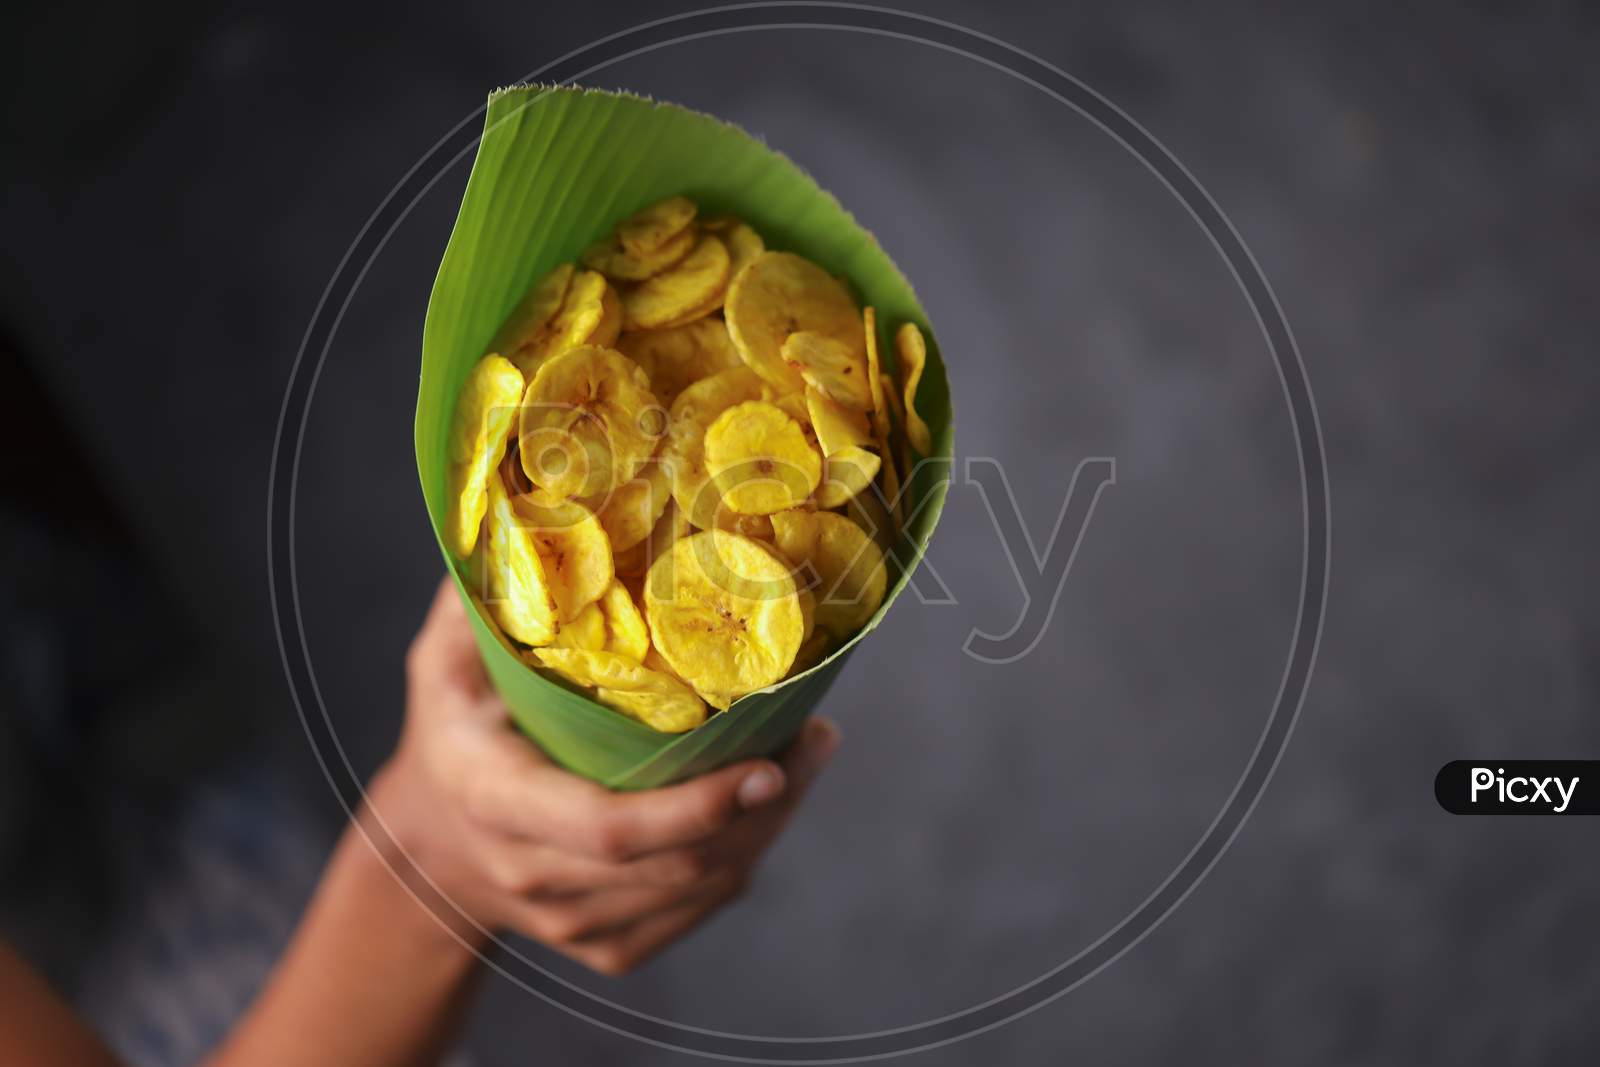 Dried Banana Chips Or Banana Waffers